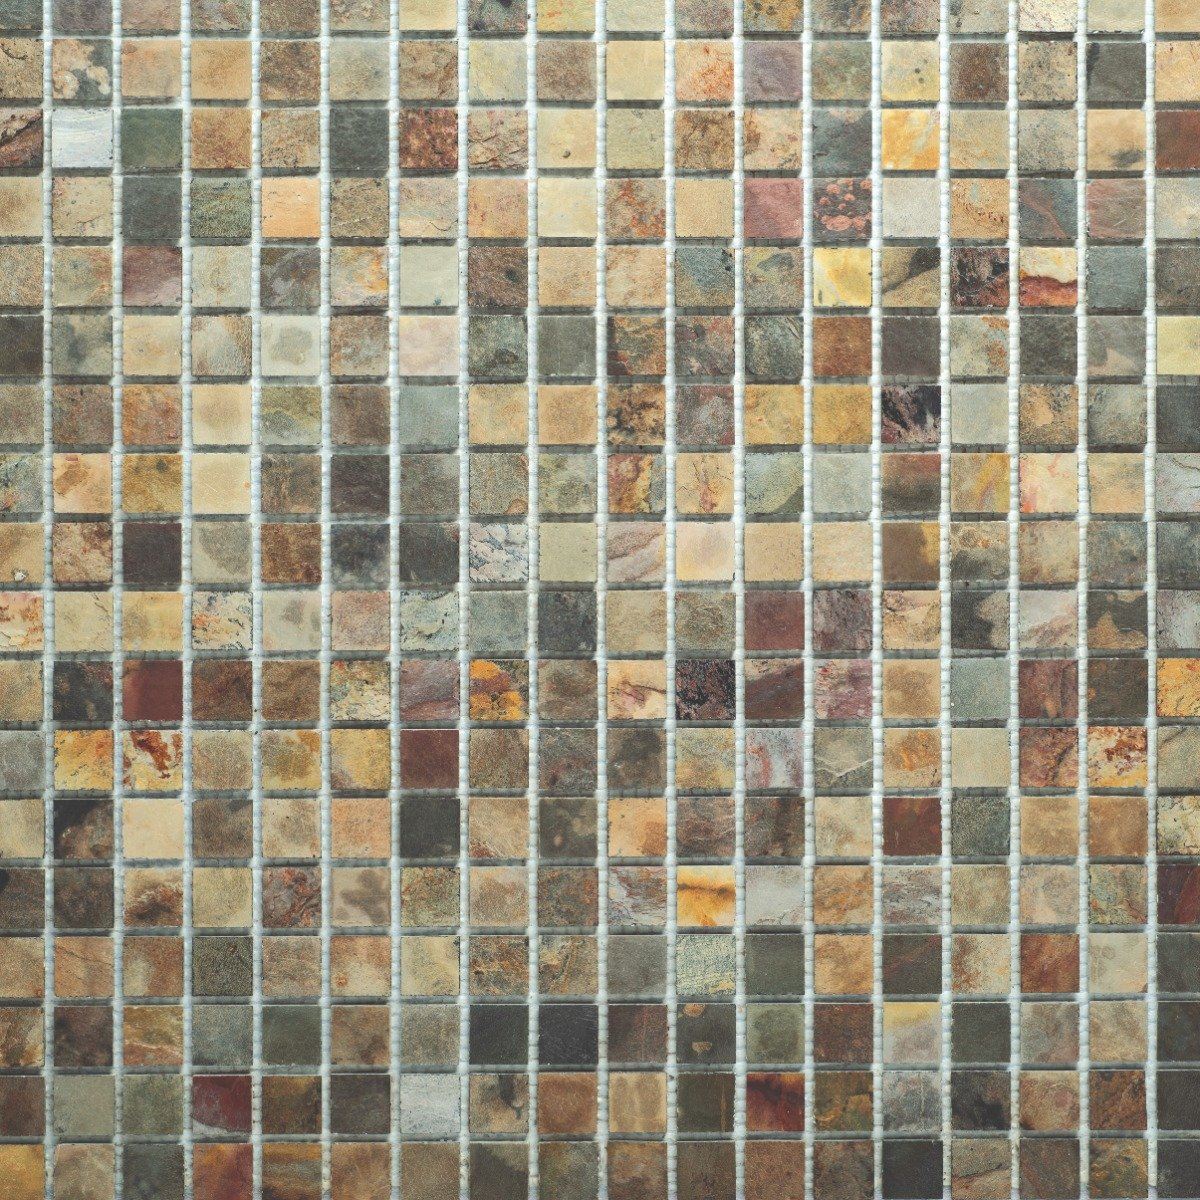 Slicedstone Mosaic Bathroom Tile Roll Autumn Leaf (25x25mm squares) 1000 x 500mm